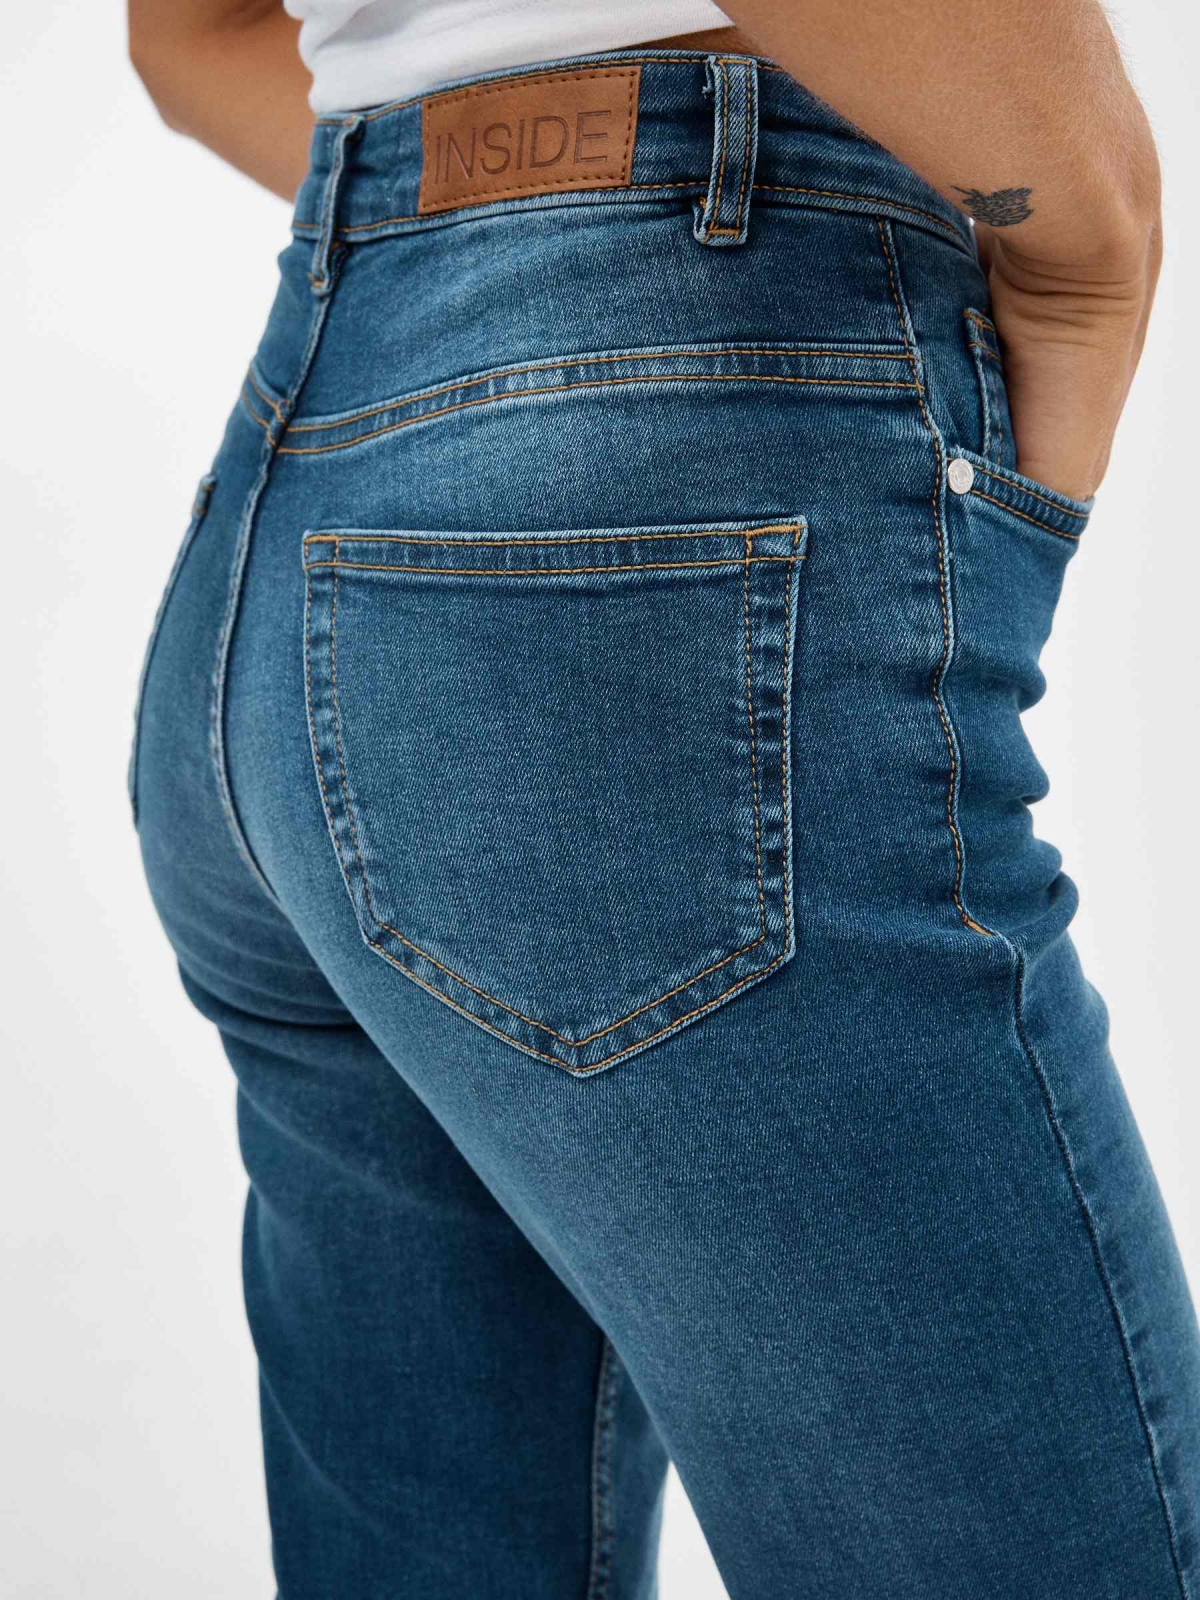 Mid-rise skinny jeans dark blue detail view